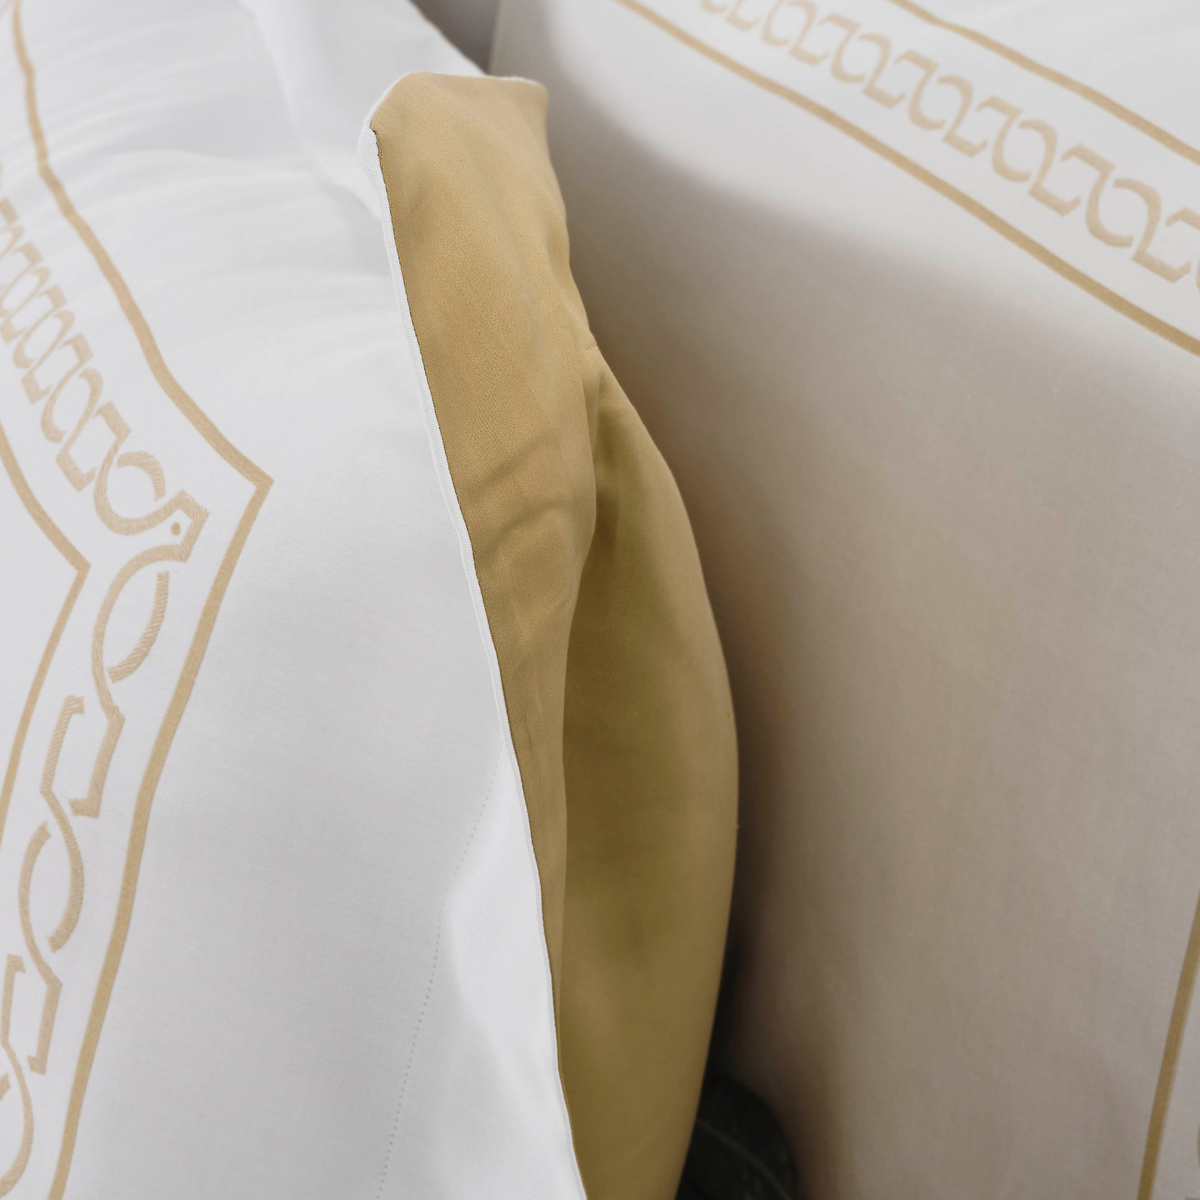 Flange Closeup of Celso de Lemos Versailles Bedding in Miel Color